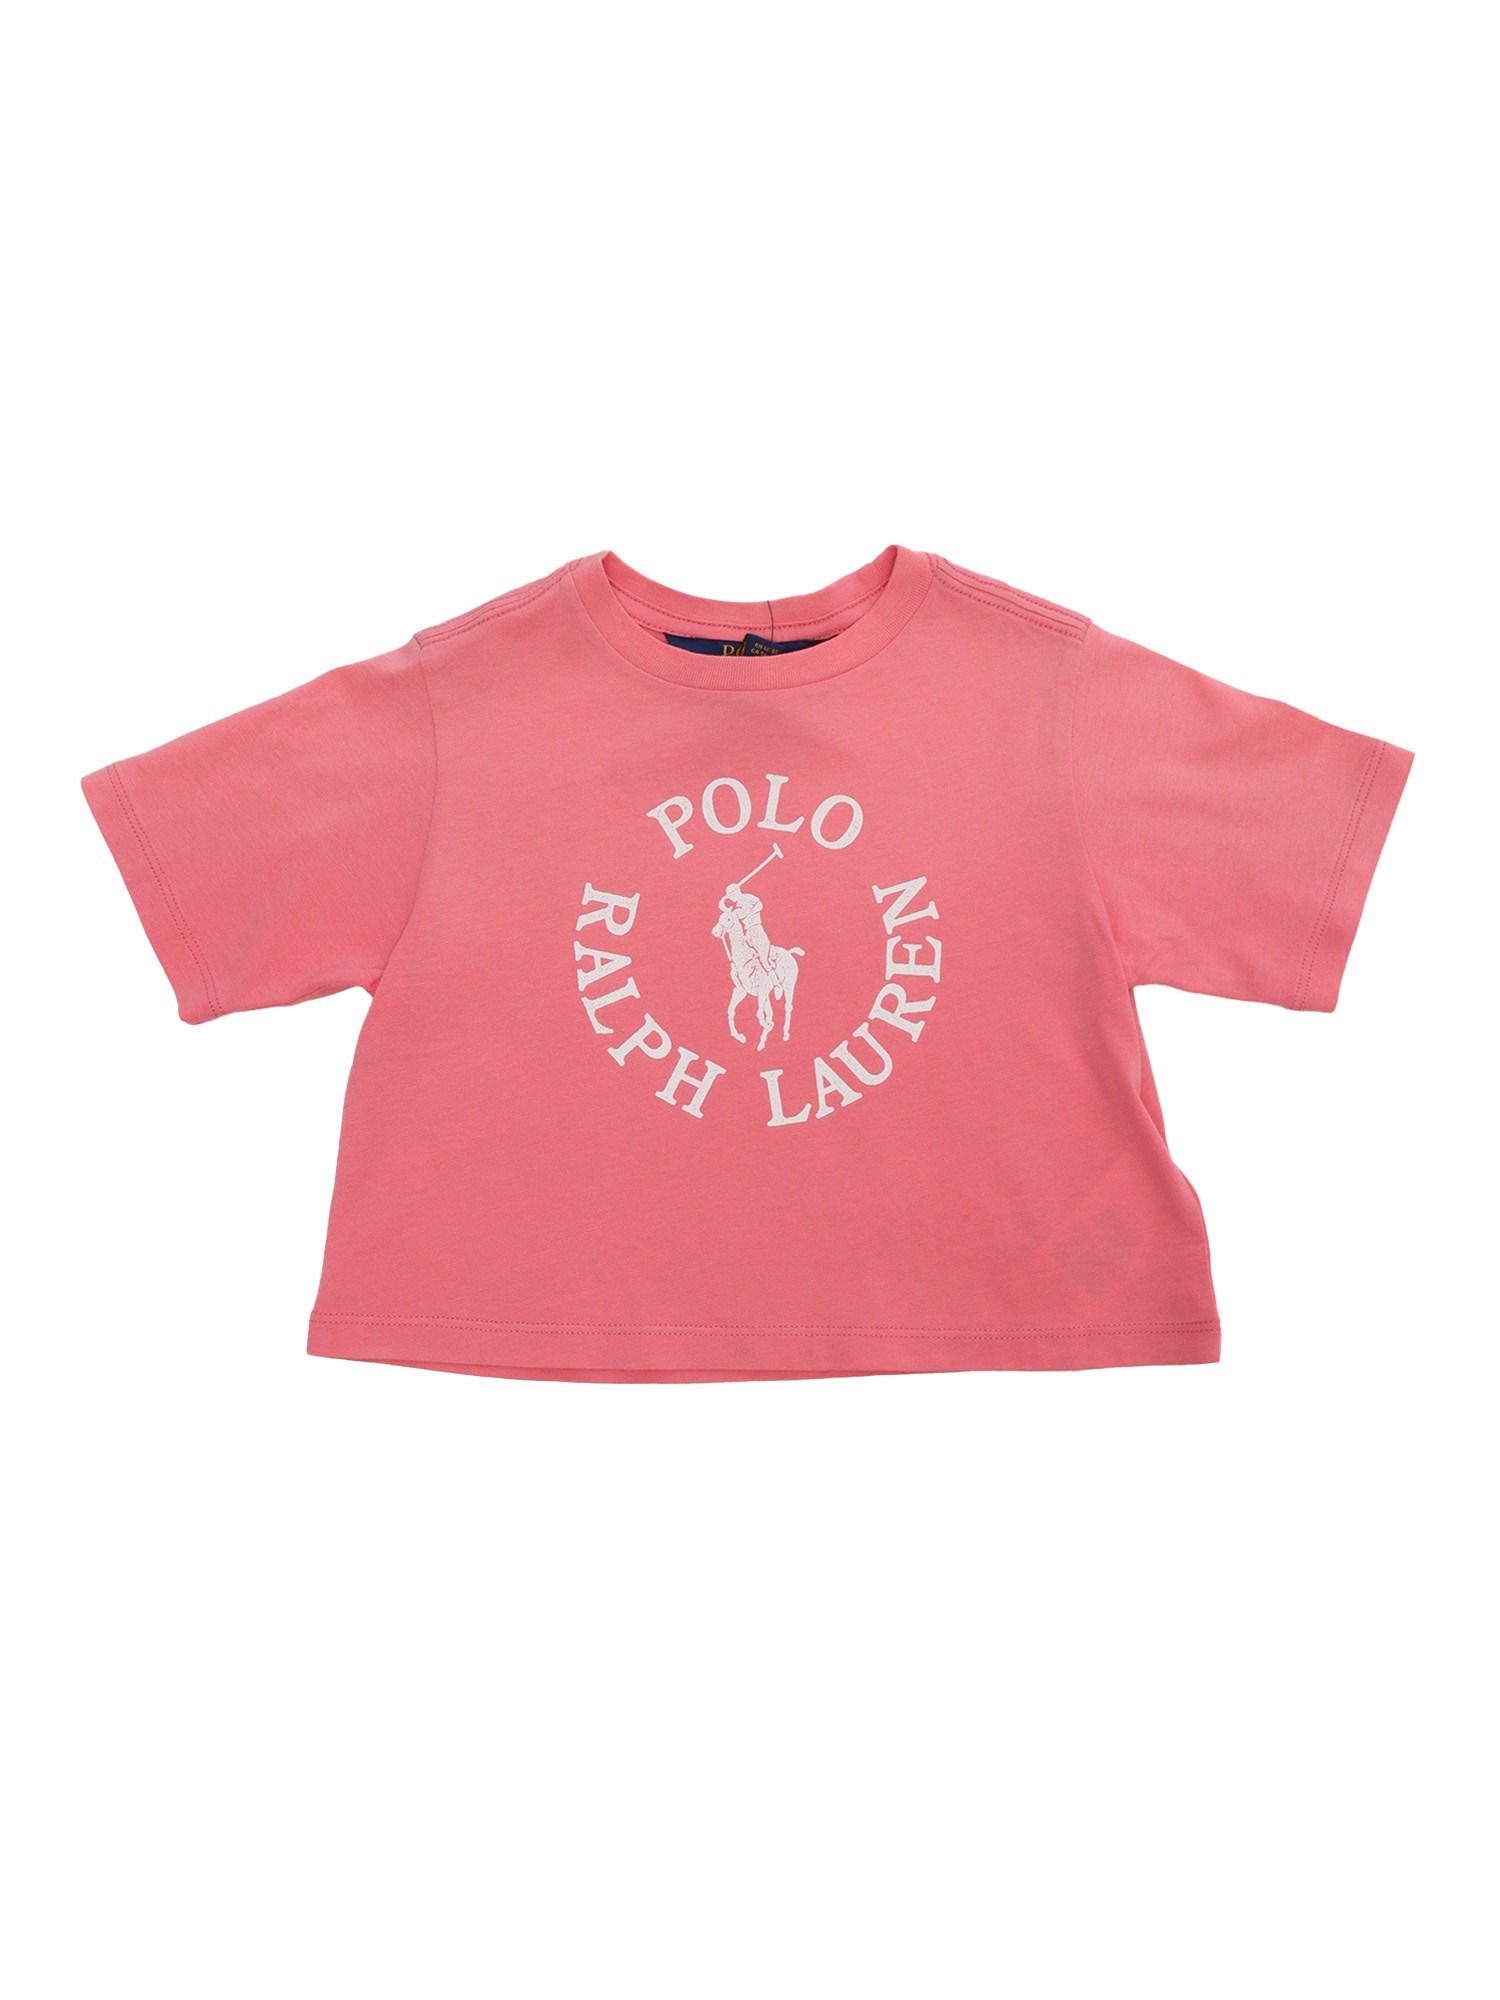 Polo Ralph Lauren Pink Cropped T-shirt